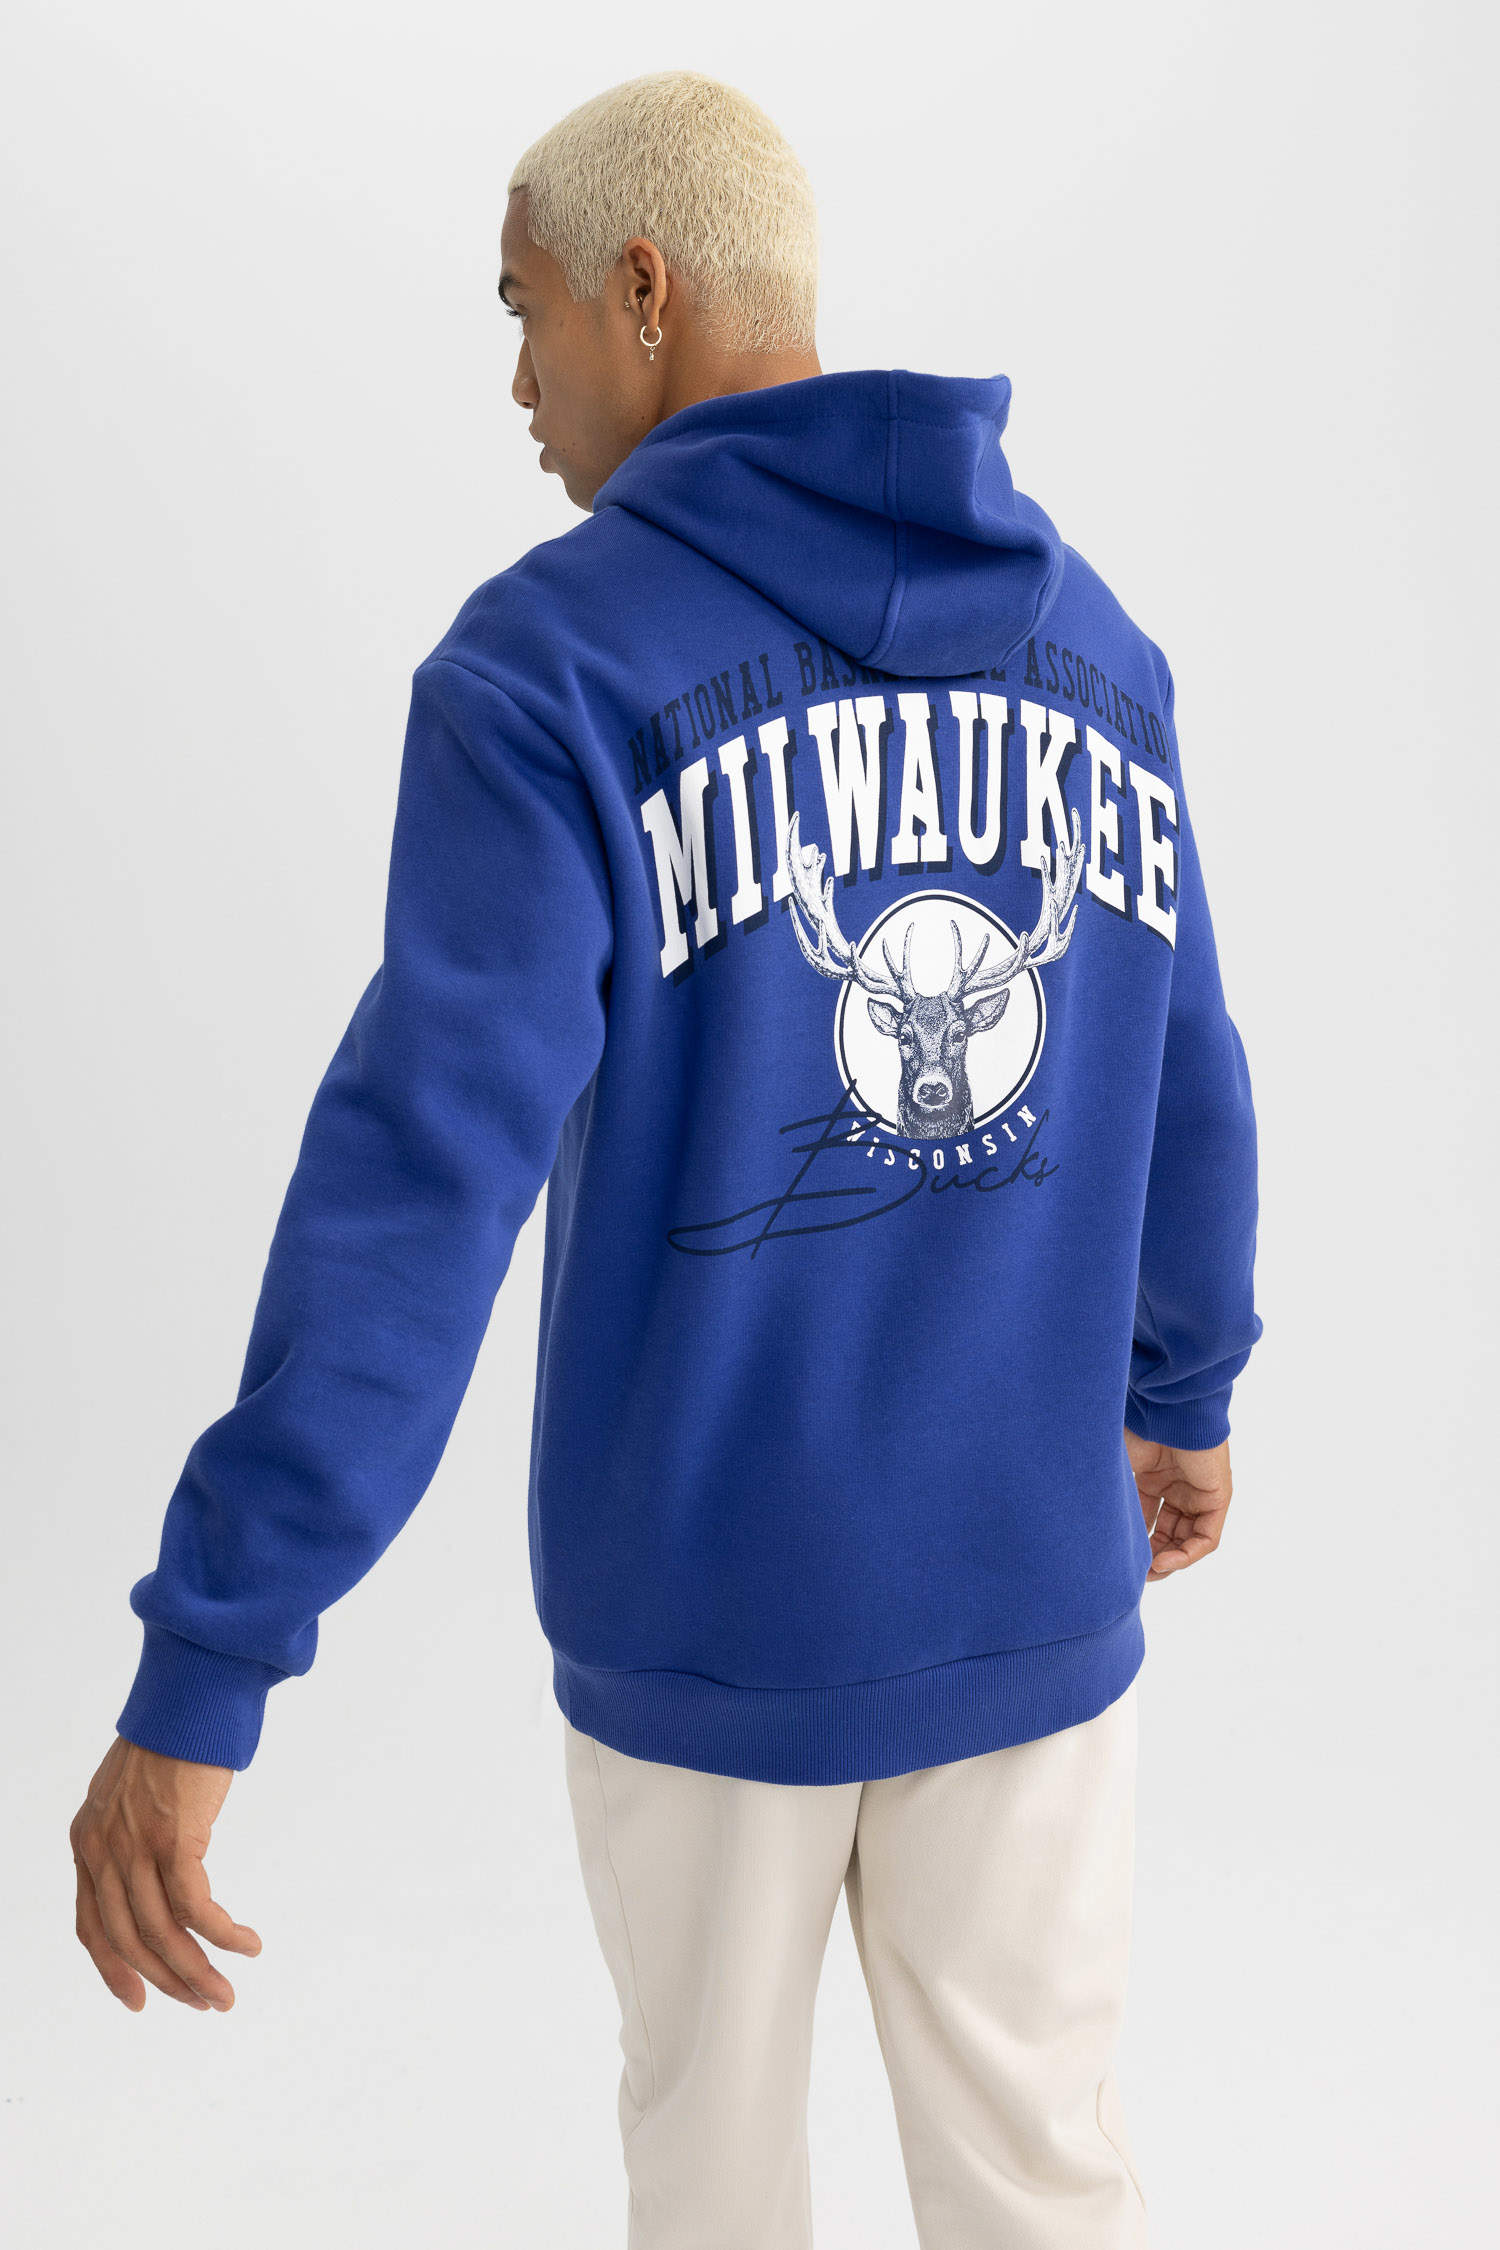 Milwaukee Bucks Hoodies, Bucks Sweatshirts